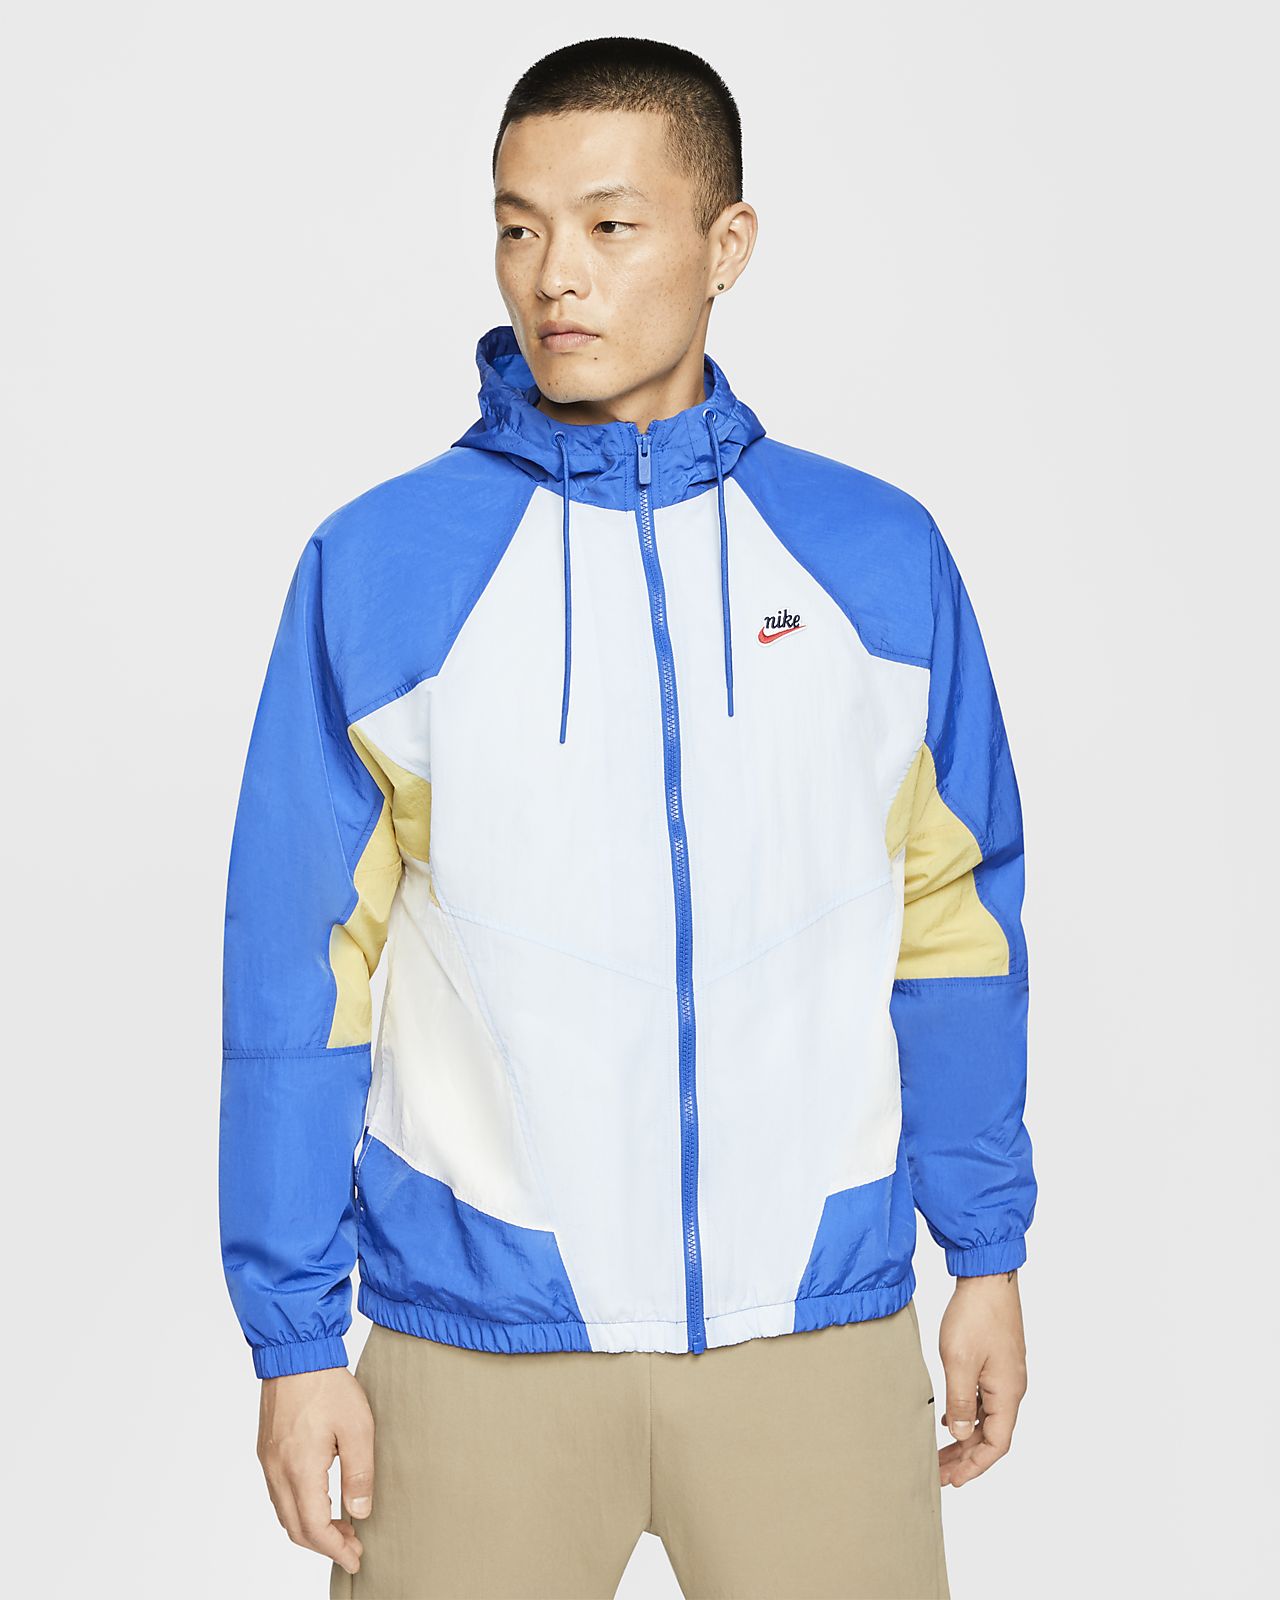 nike sportswear colour block lightweight jacket junior,lsqa.com.uy